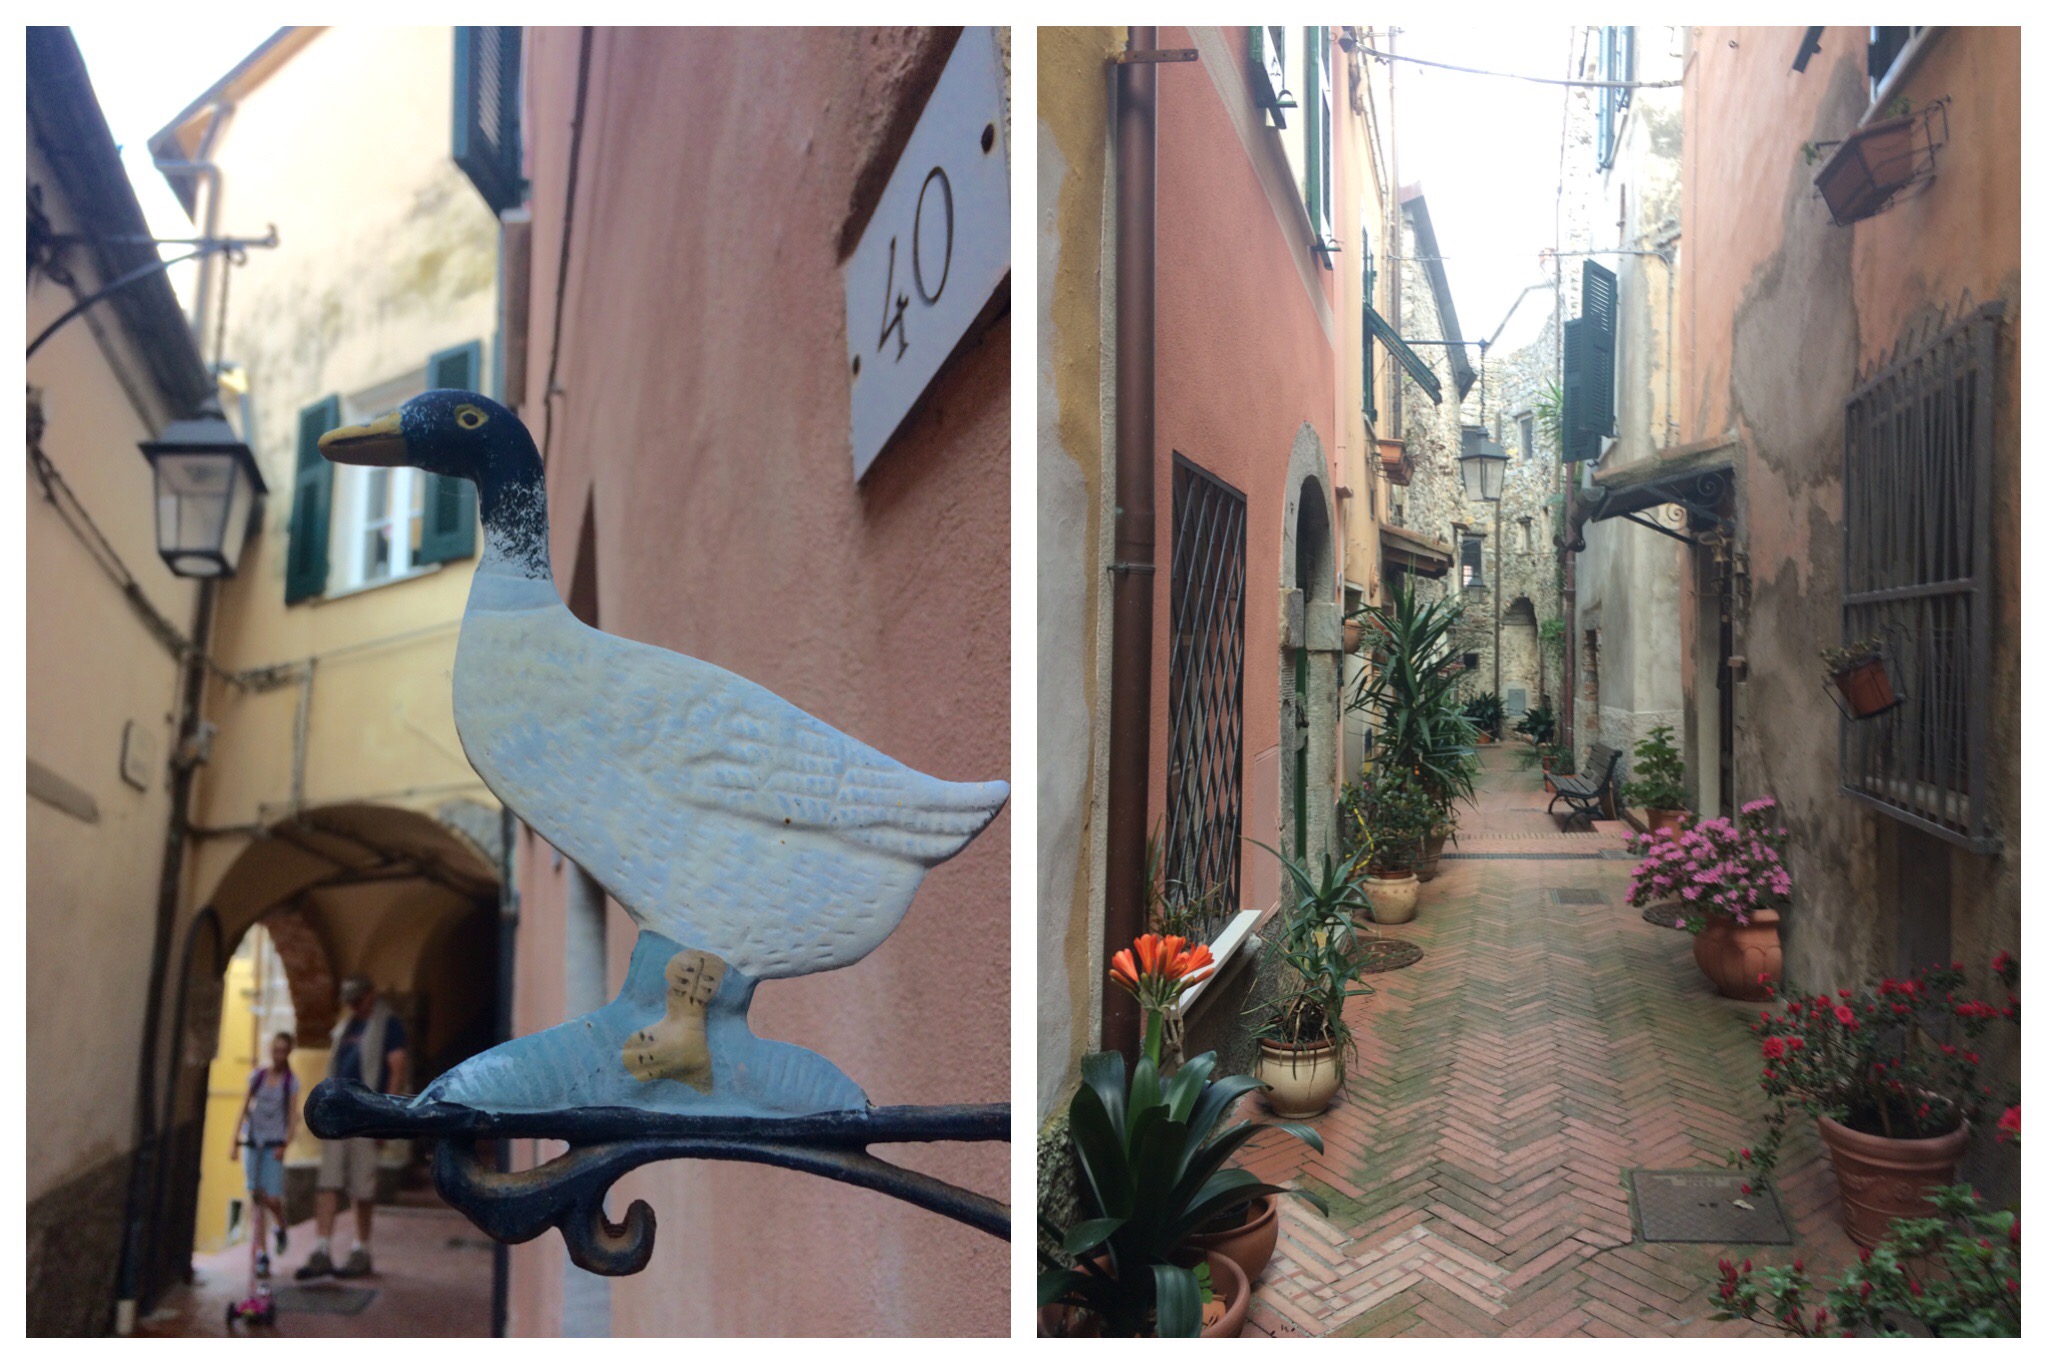 Liguria - Ameglia old town narrow streets